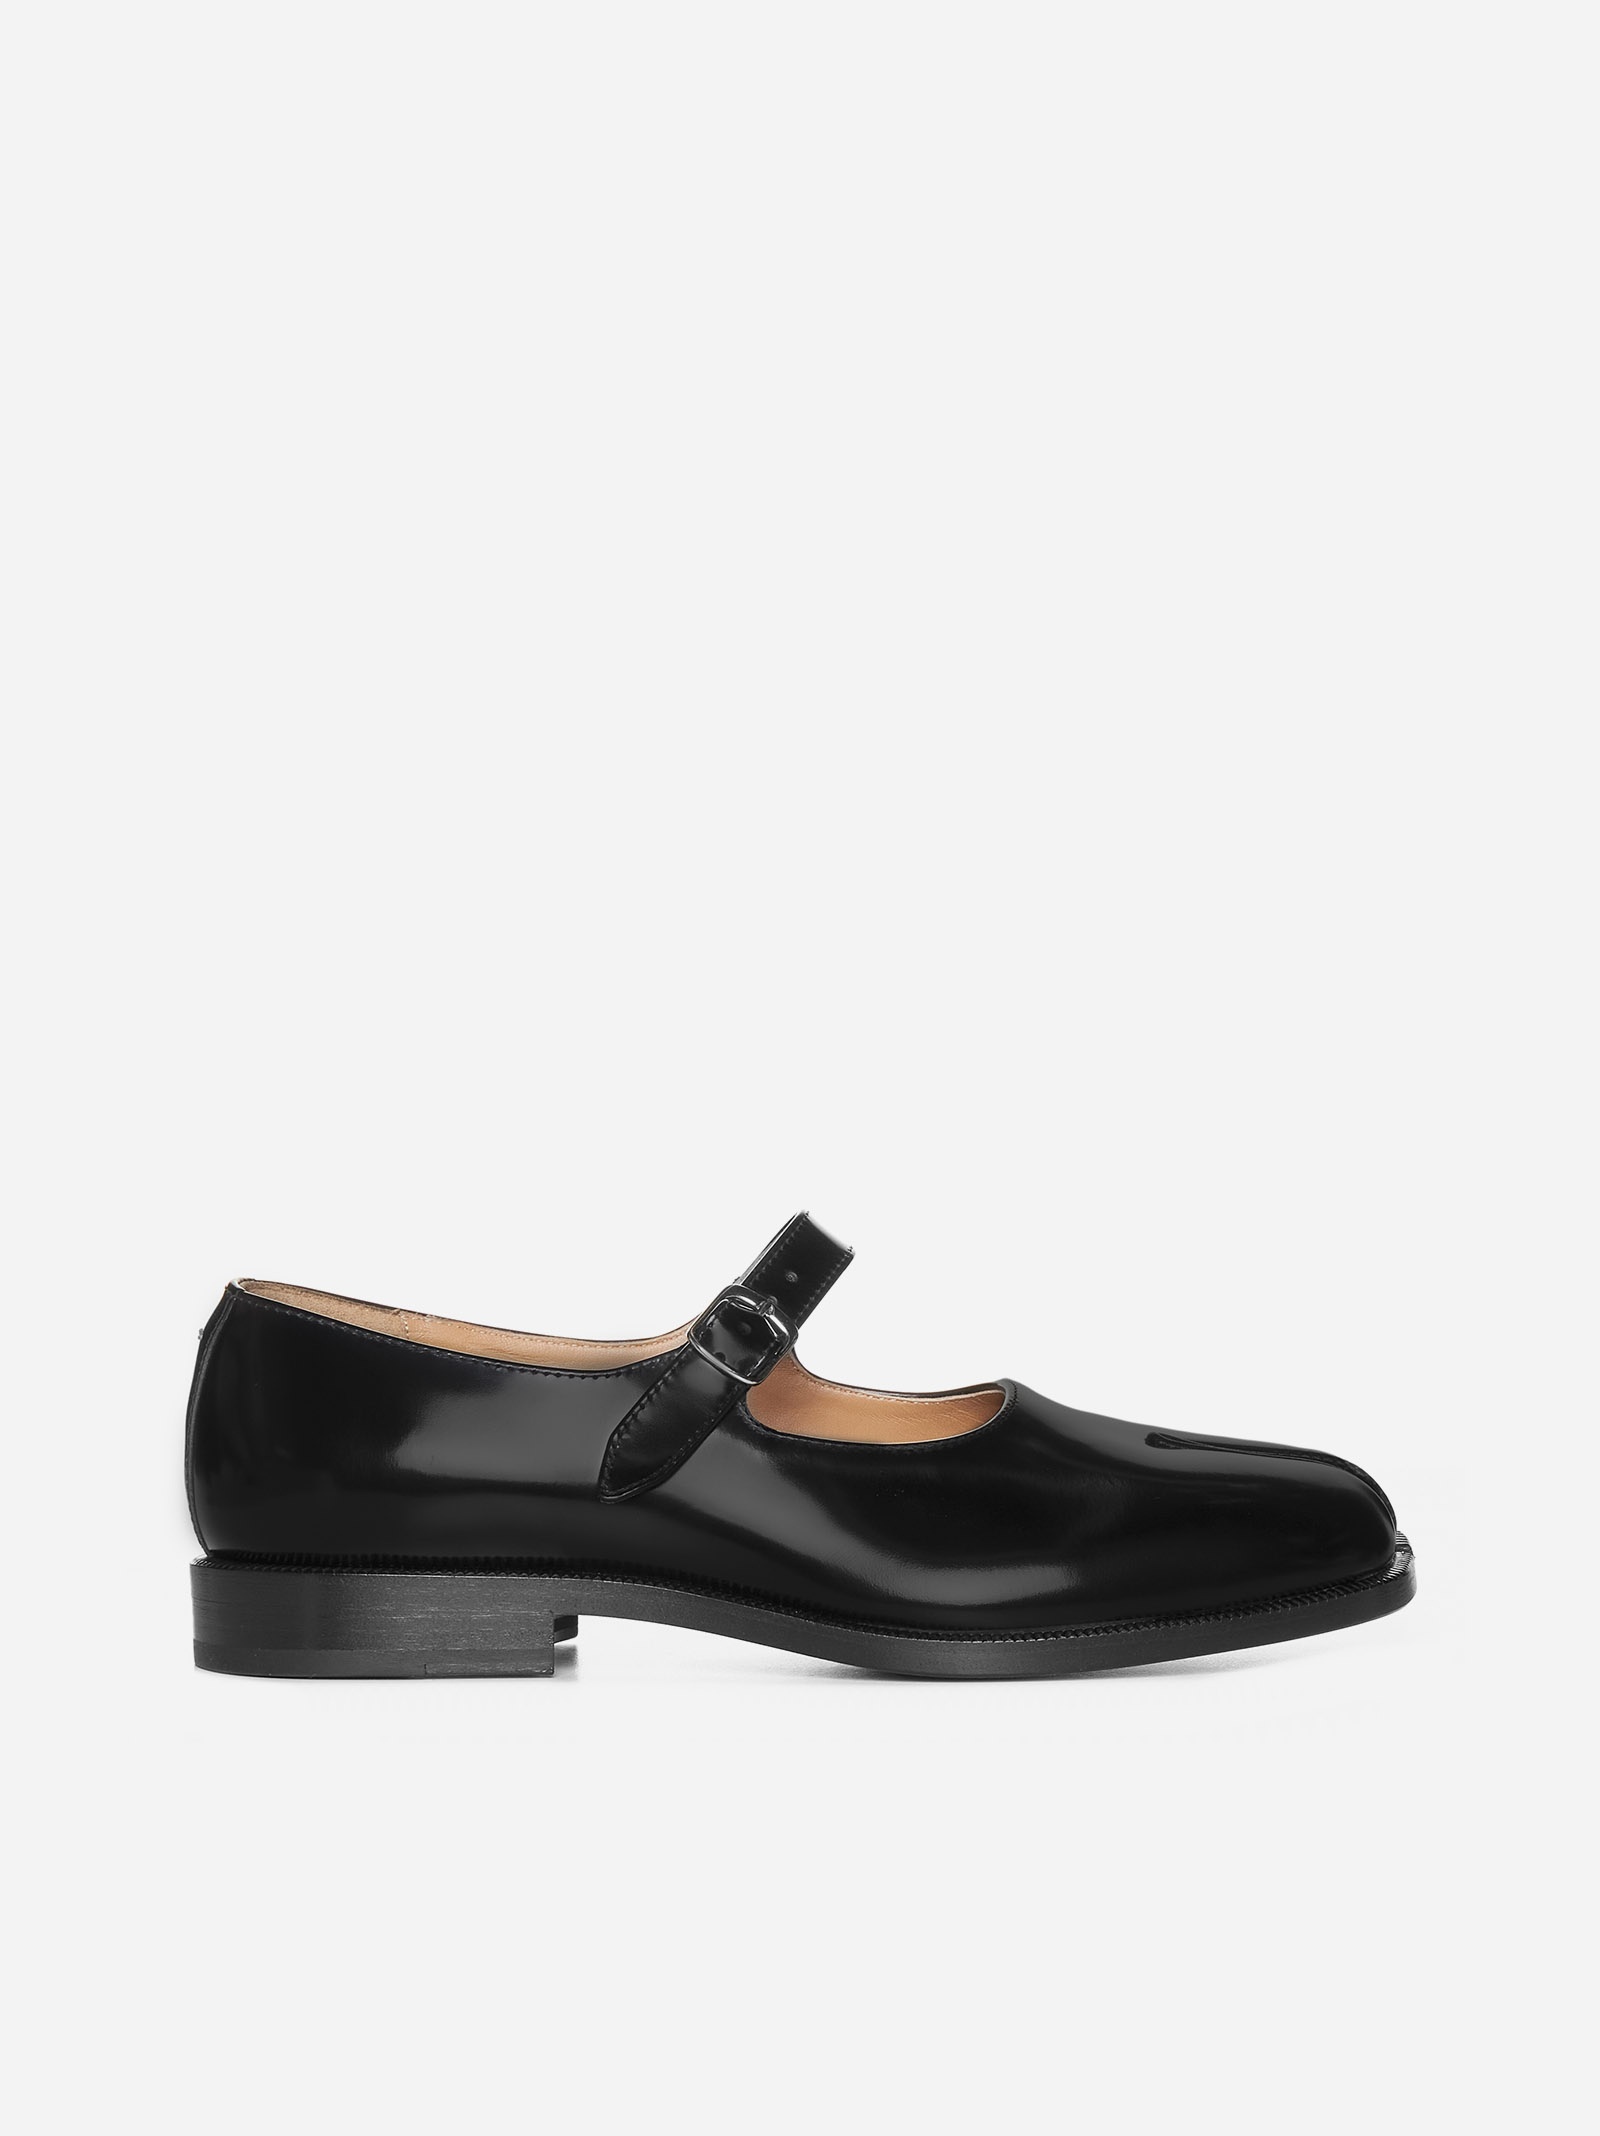 Tabi leather Mary Jane shoes - 1